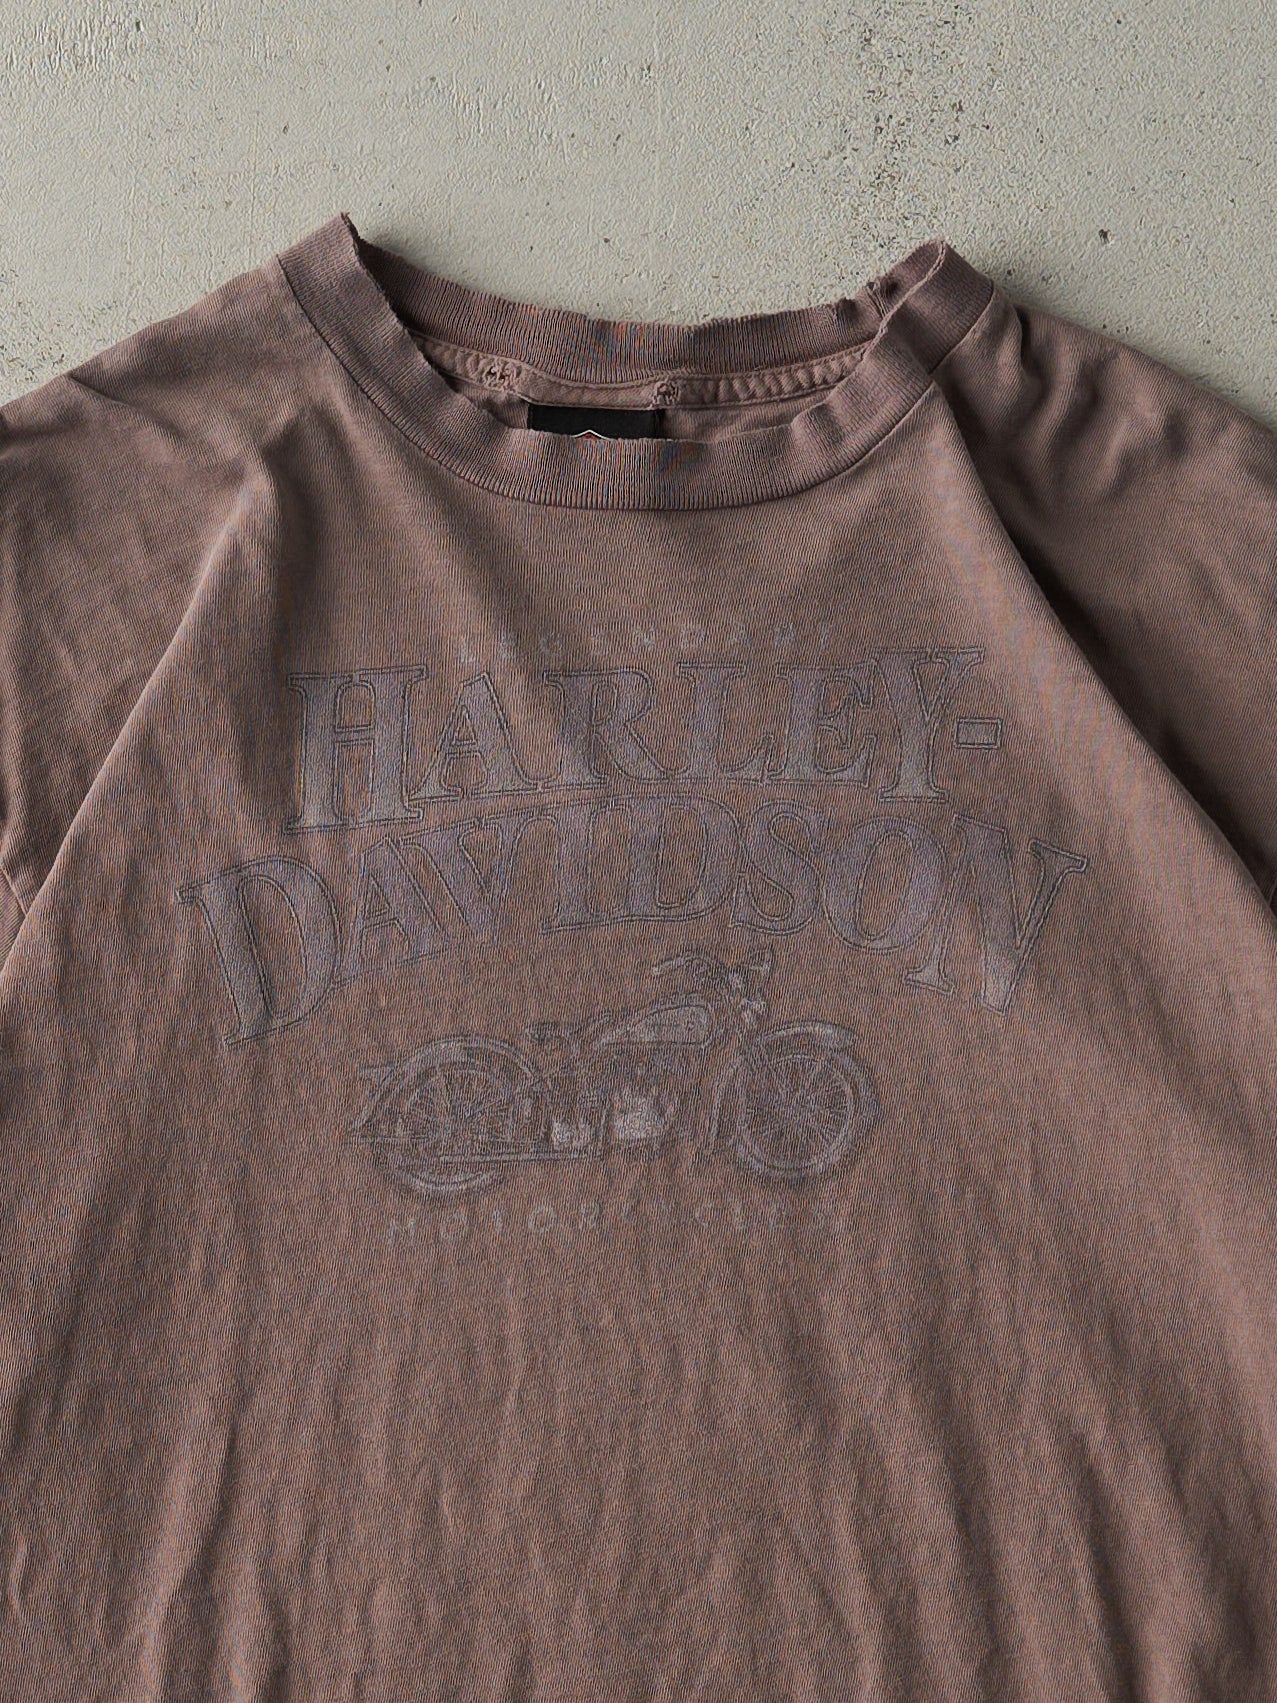 Vintage Y2K Washed Grey Tifton, Georgia Harley Davidson Tee (M)